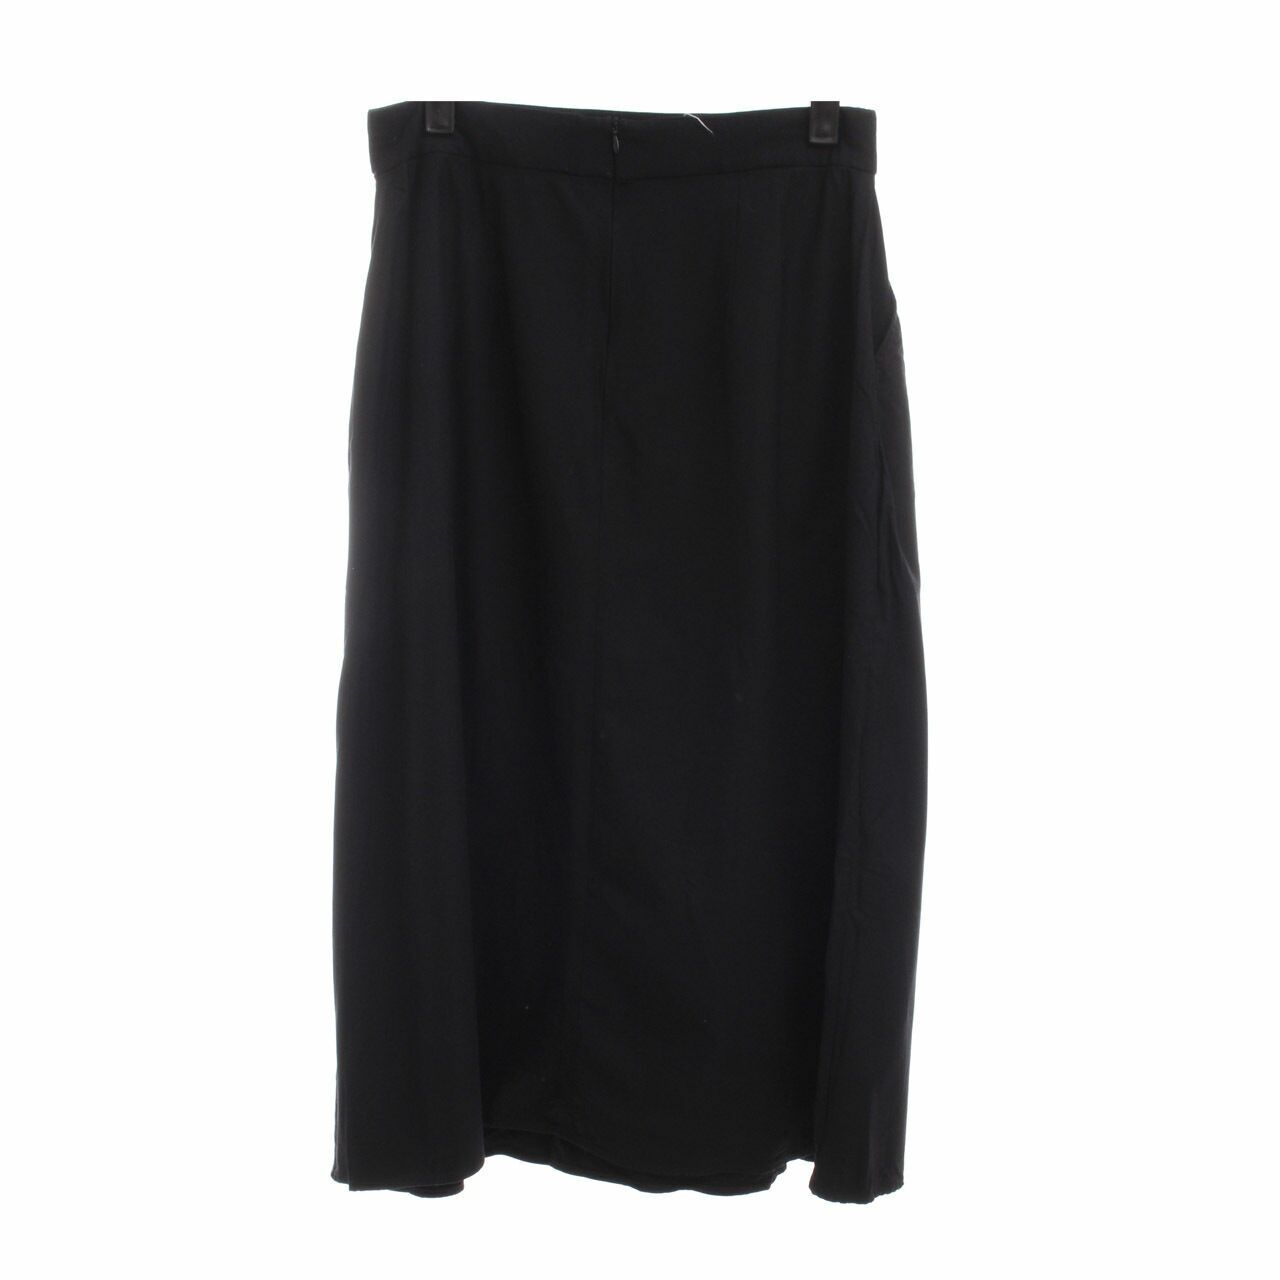 Kle Black Maxi Skirt